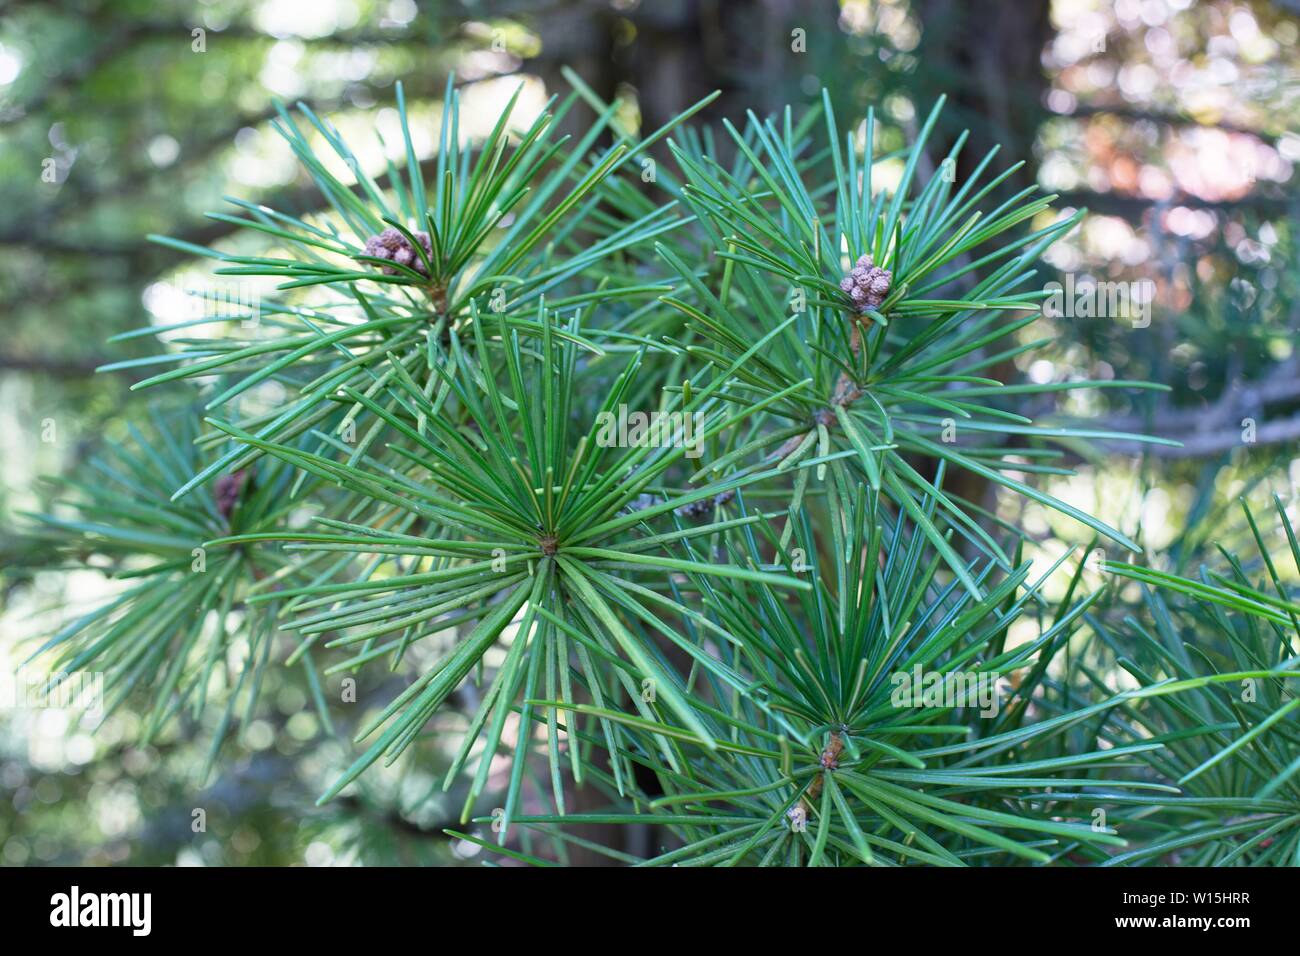 Sciadopitys verticillata 'Wintergreen Wintergreen' / Parapluie japonais pin. Banque D'Images